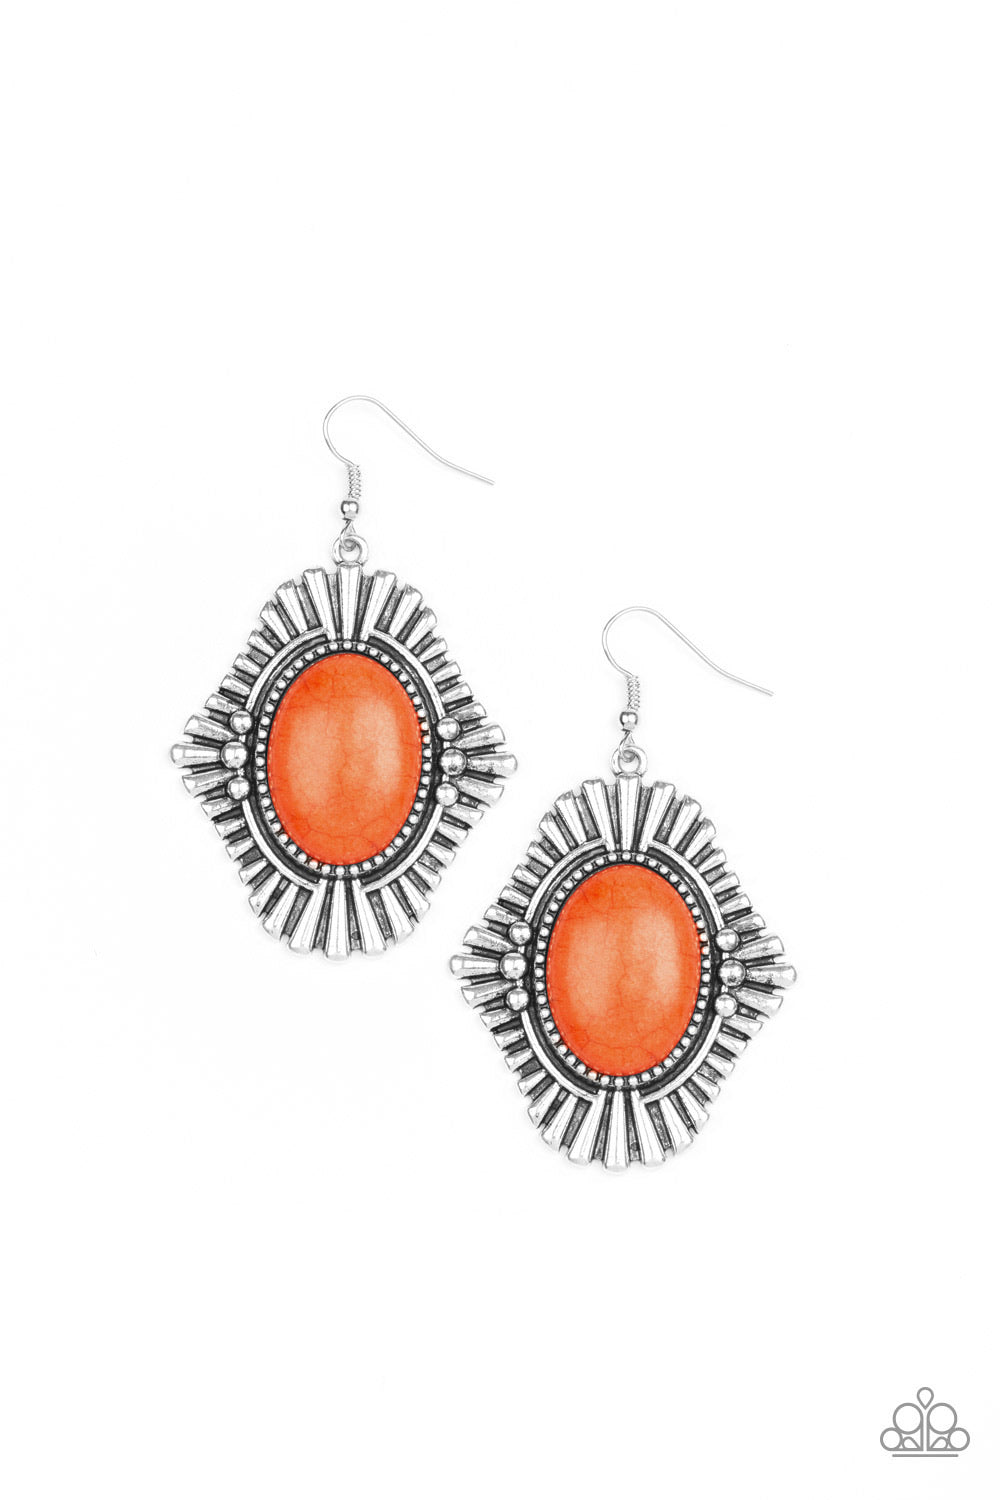 Paparazzi Earrings - Easy As PIONEER - Orange Stone - Earrings - 2019 Convention Exclusive - SHOPBLINGINGPRETTY